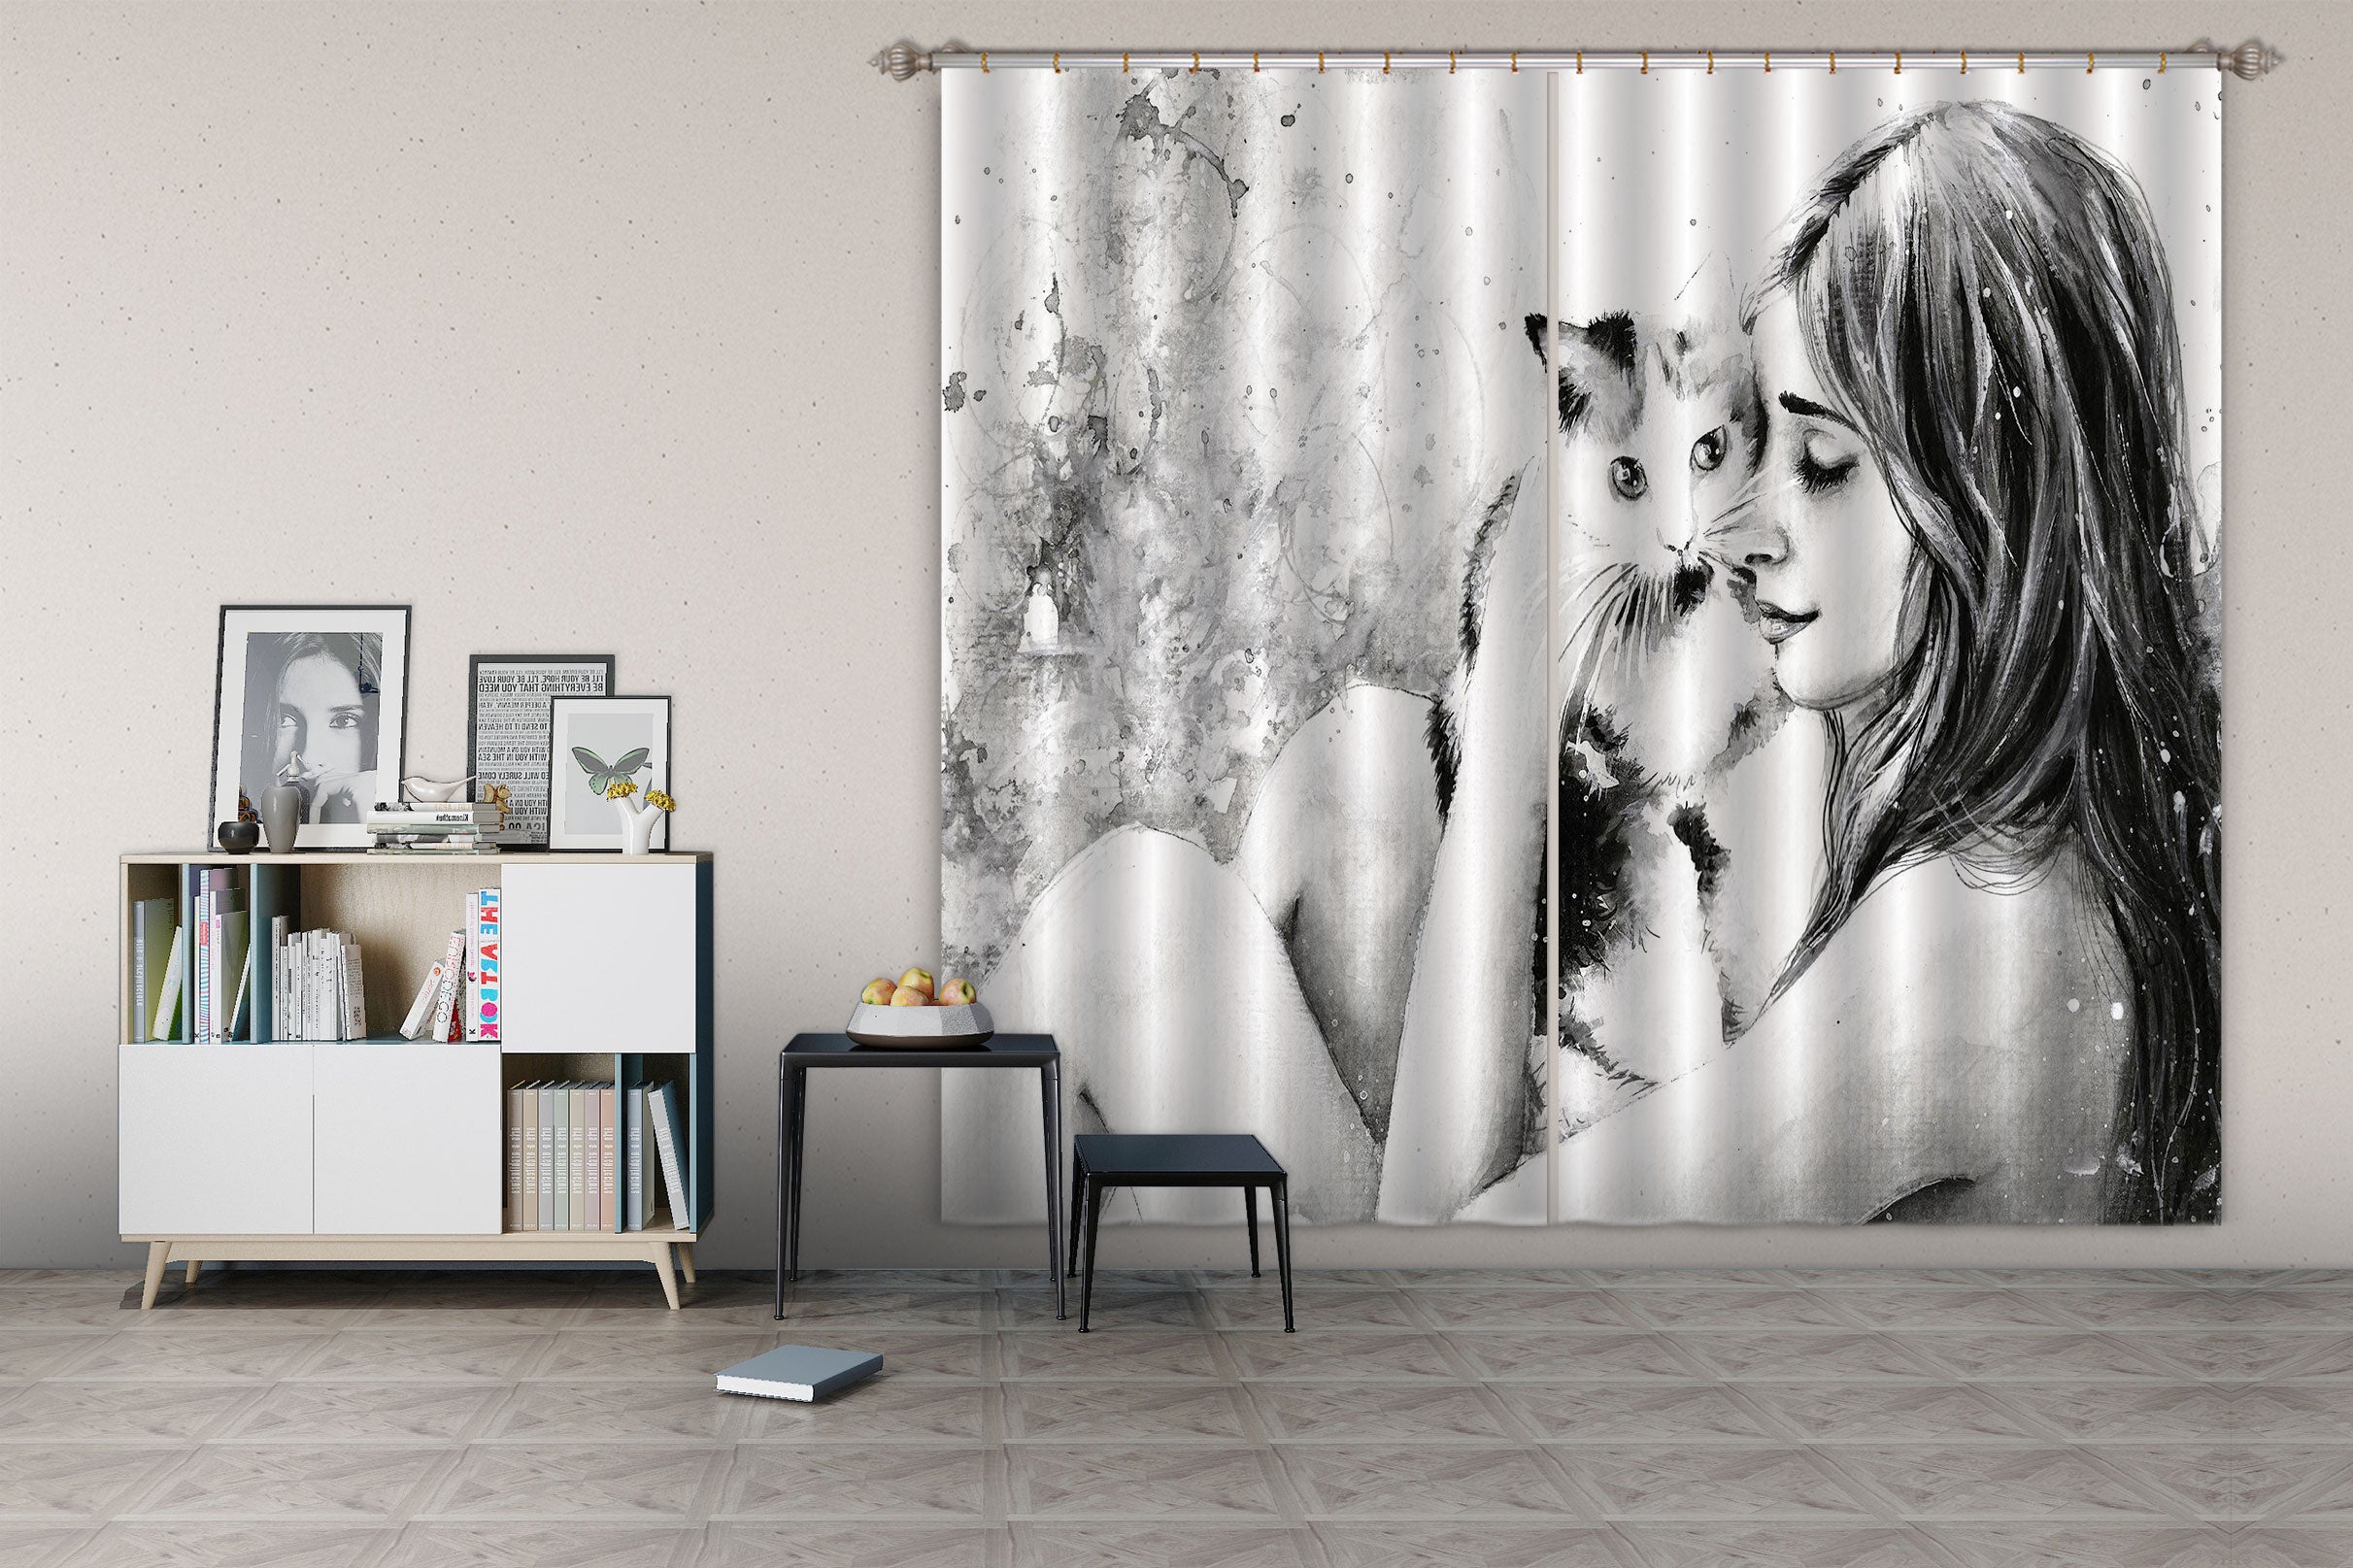 3D Sketch Kitten 031 Curtains Drapes